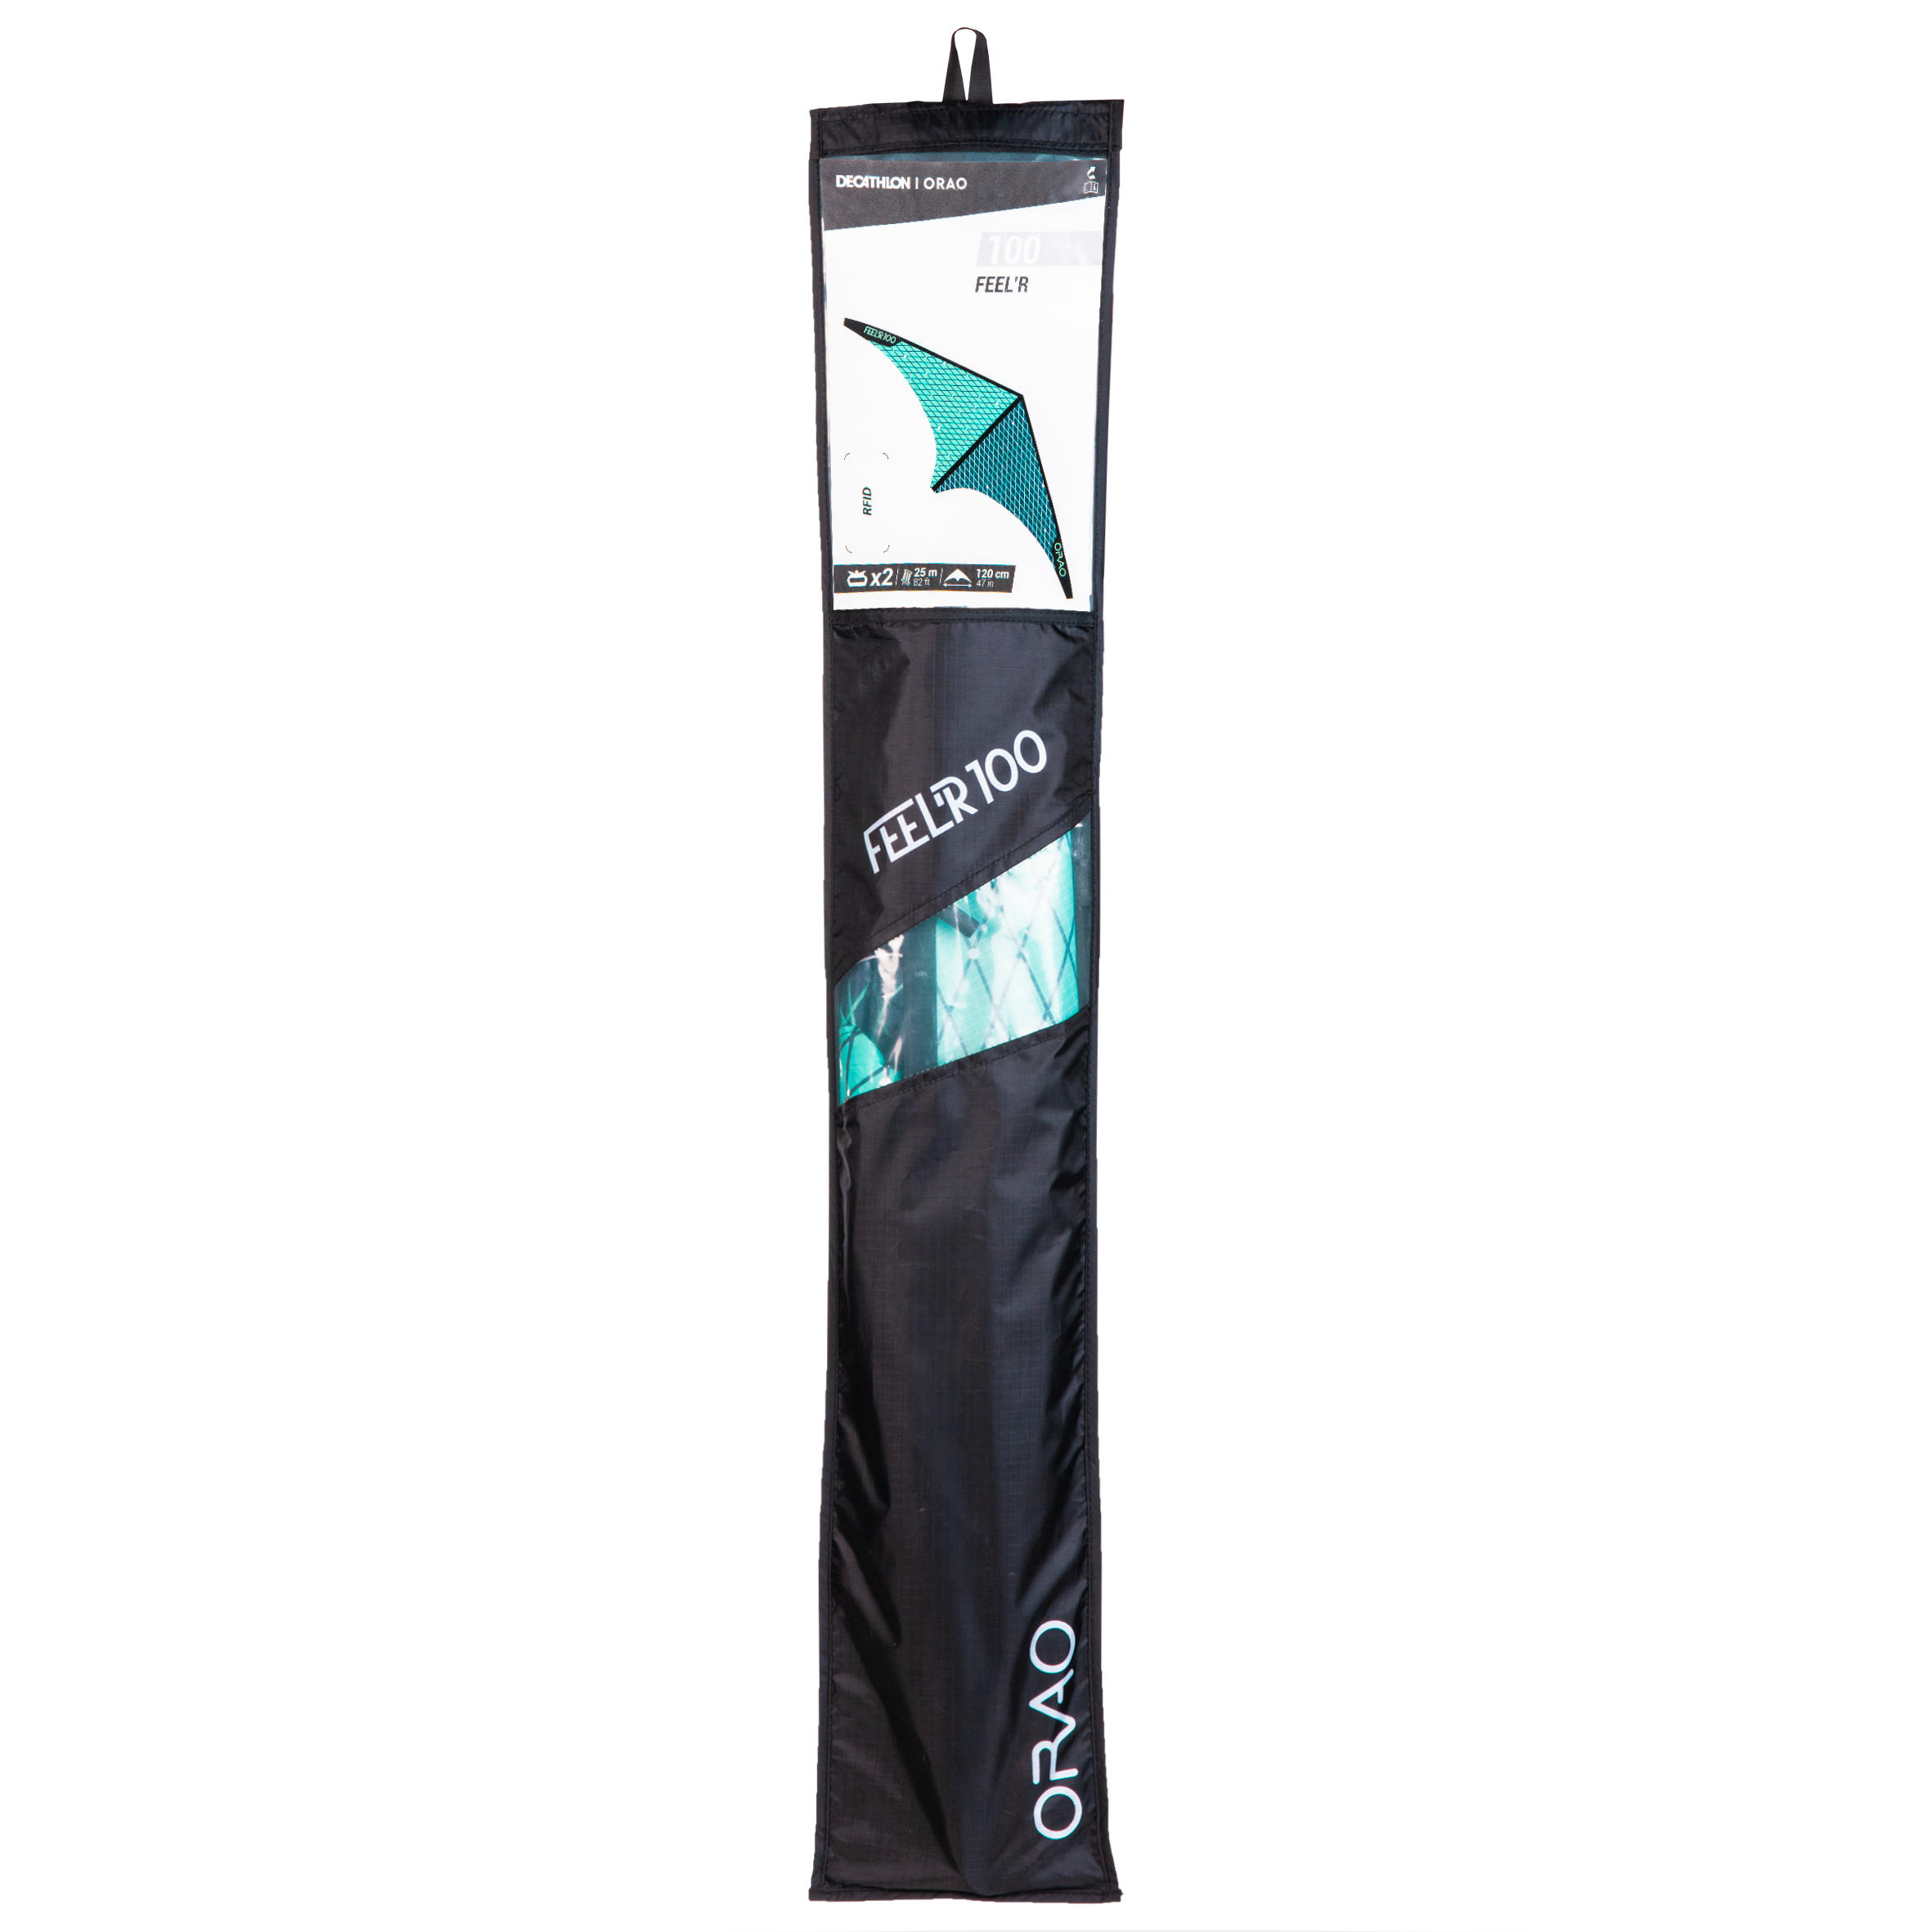 Feel'R 100 Stunt Kite - No Size By ORAO | Decathlon